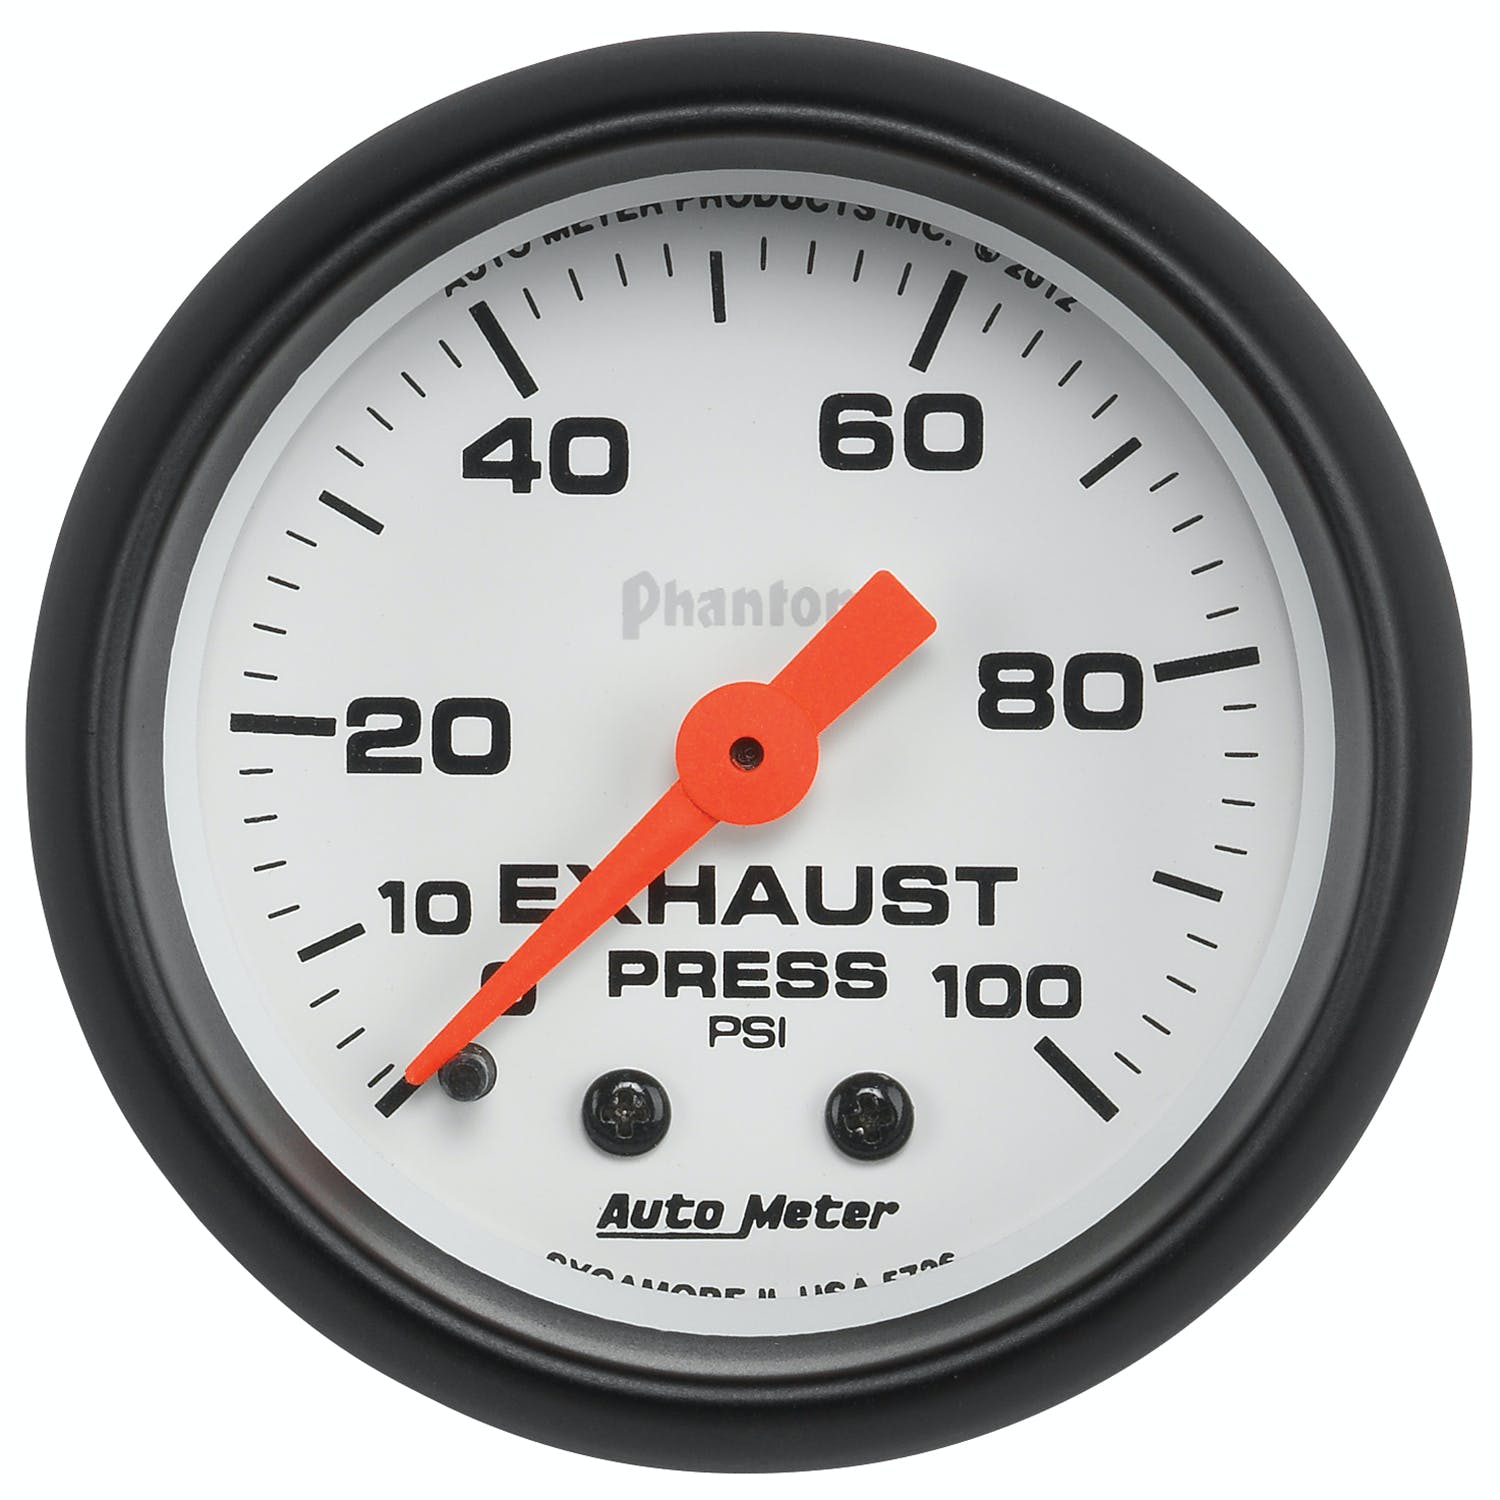 AutoMeter Products 5726 Phantom Mechanical Exhaust Pressure Gauge